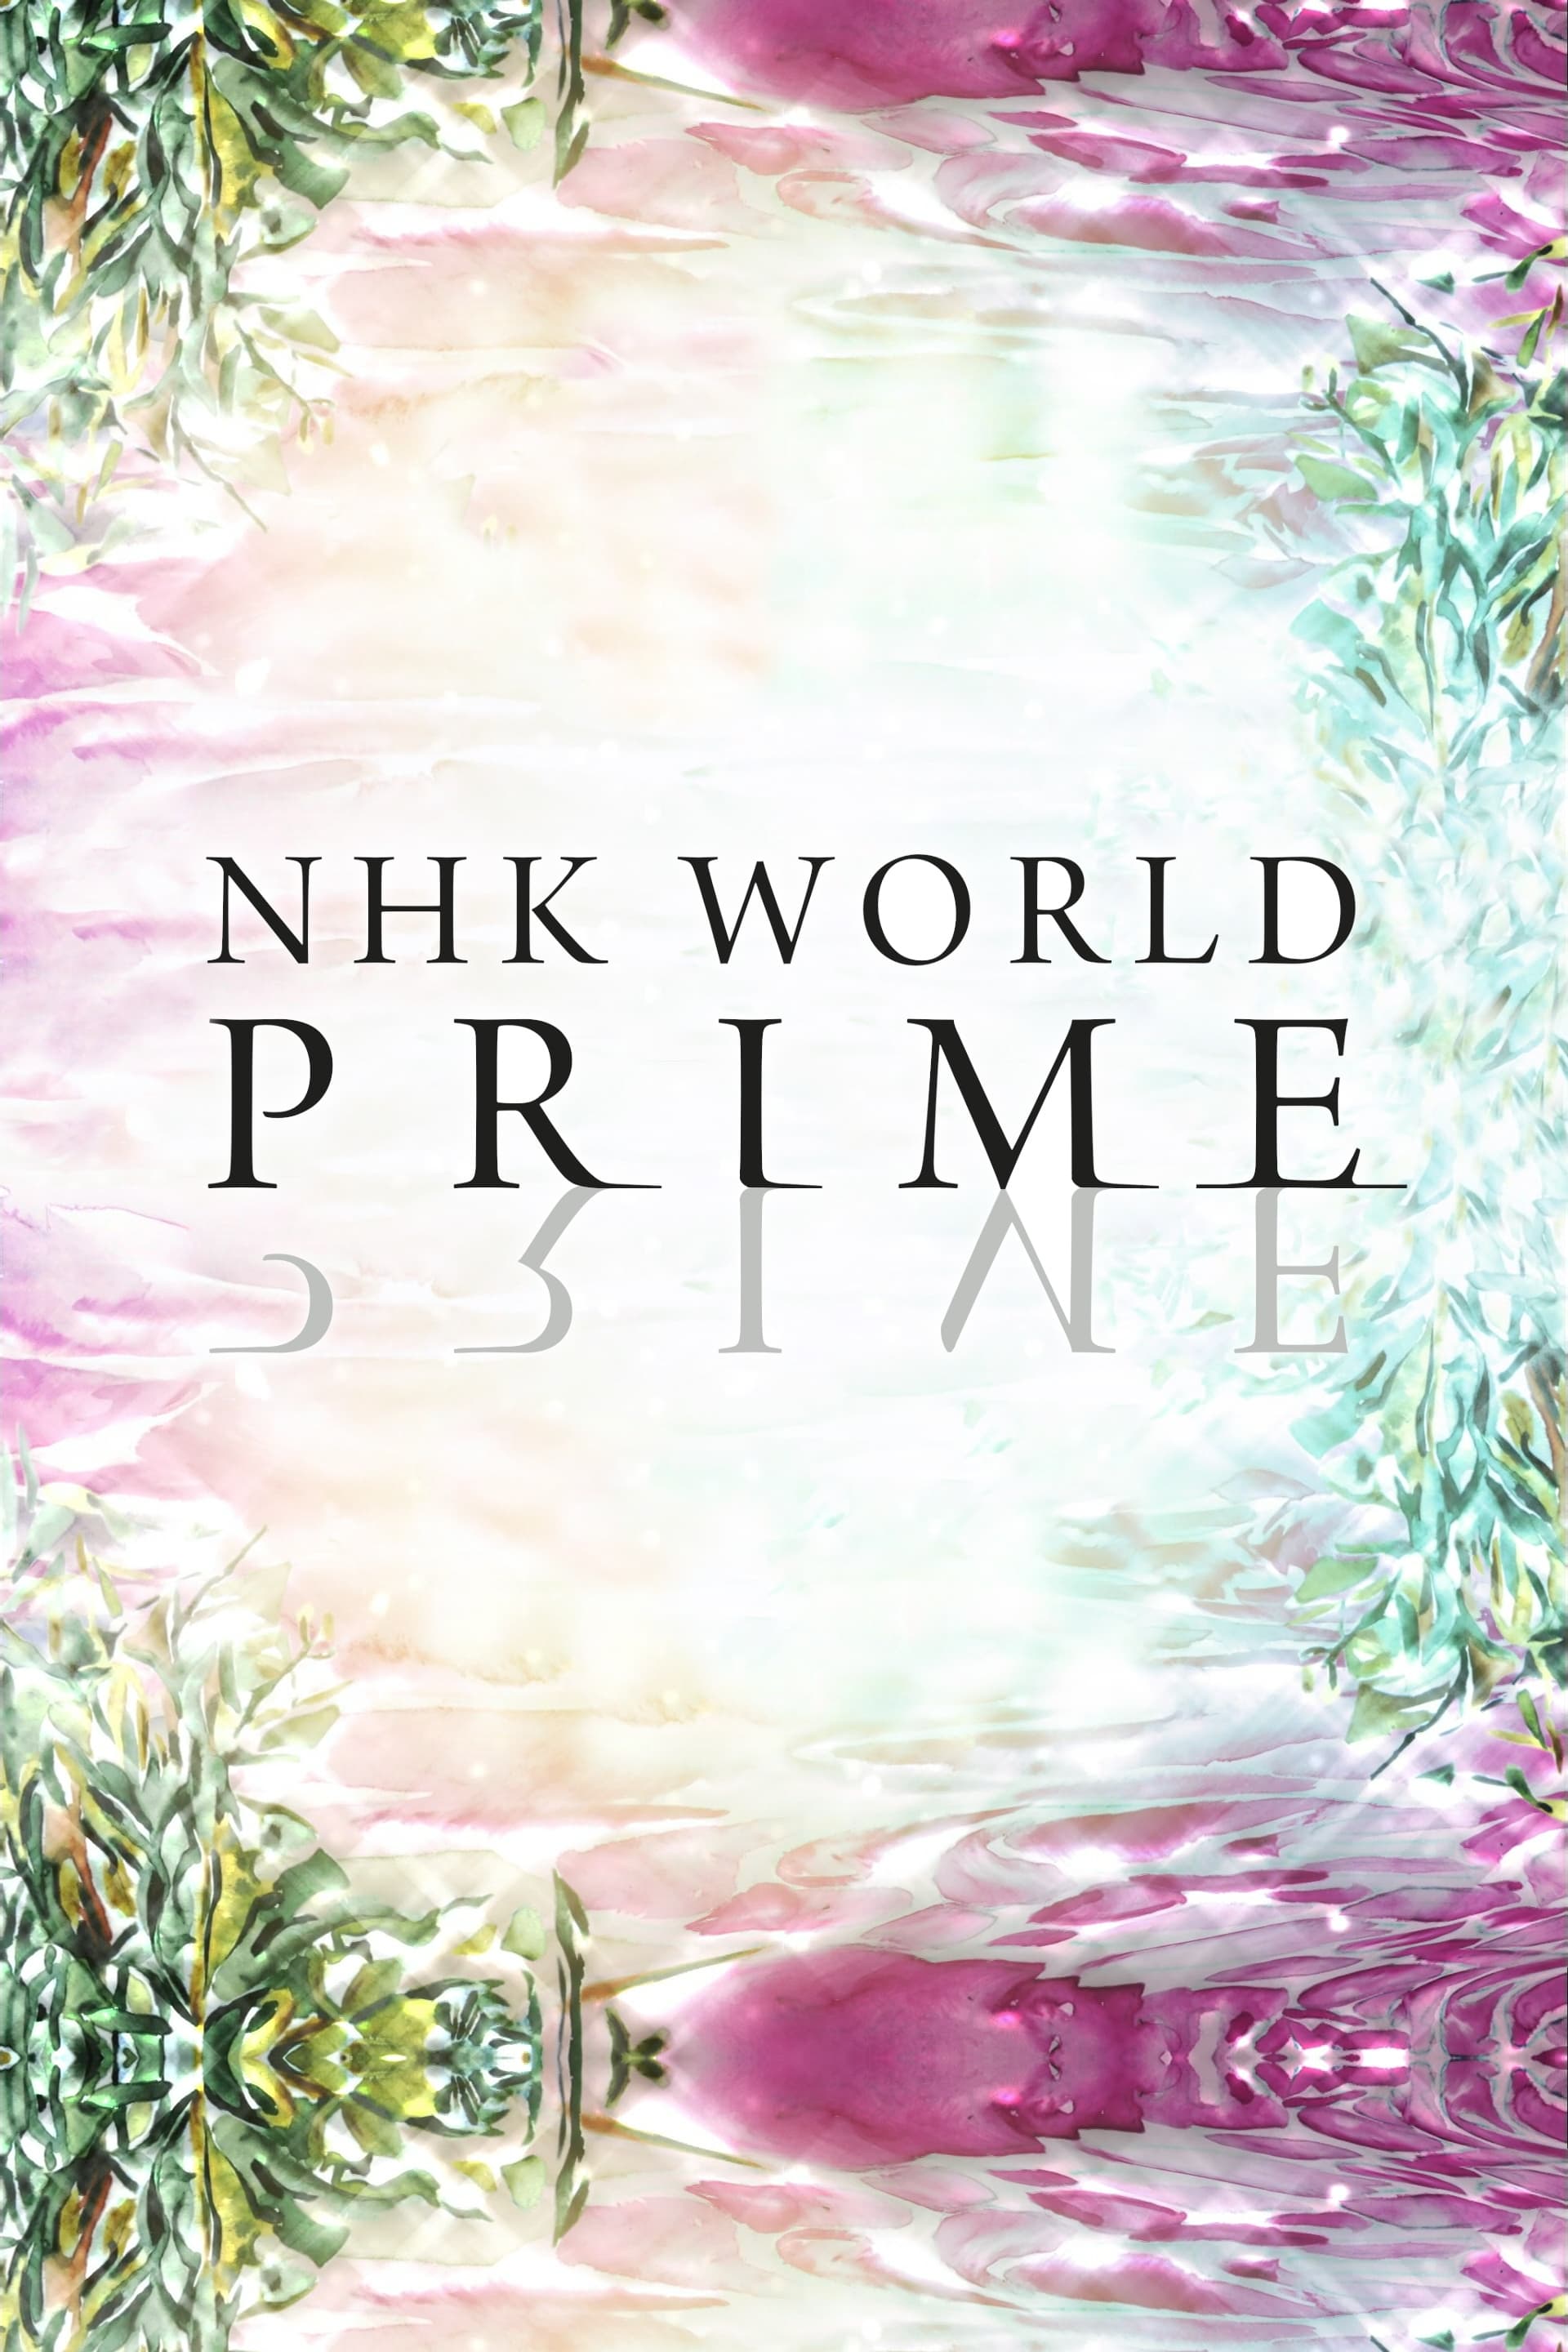 NHK WORLD PRIME